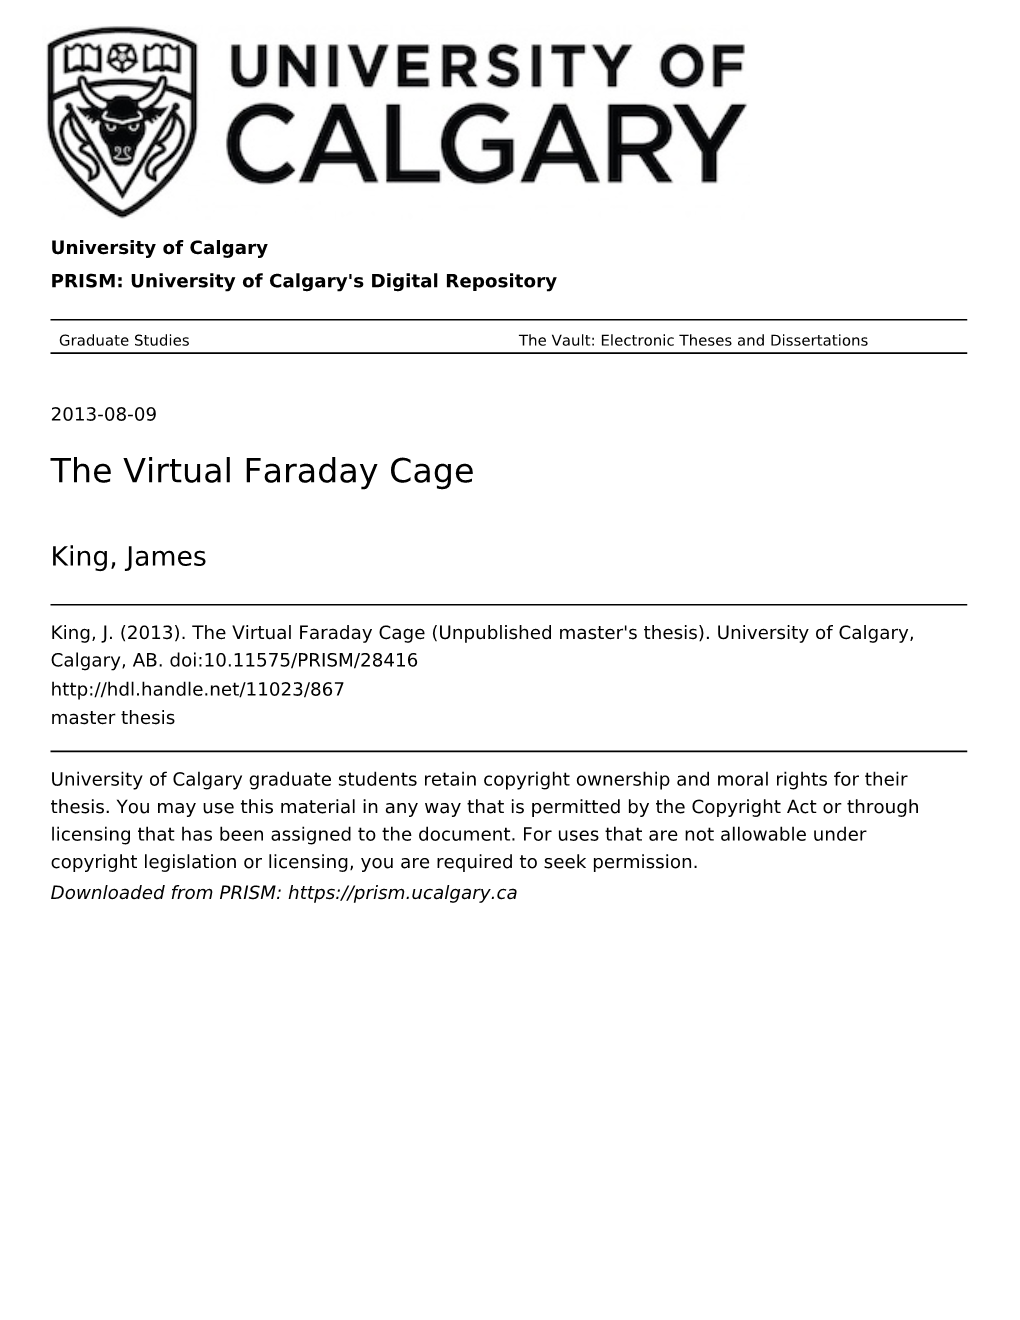 The Virtual Faraday Cage